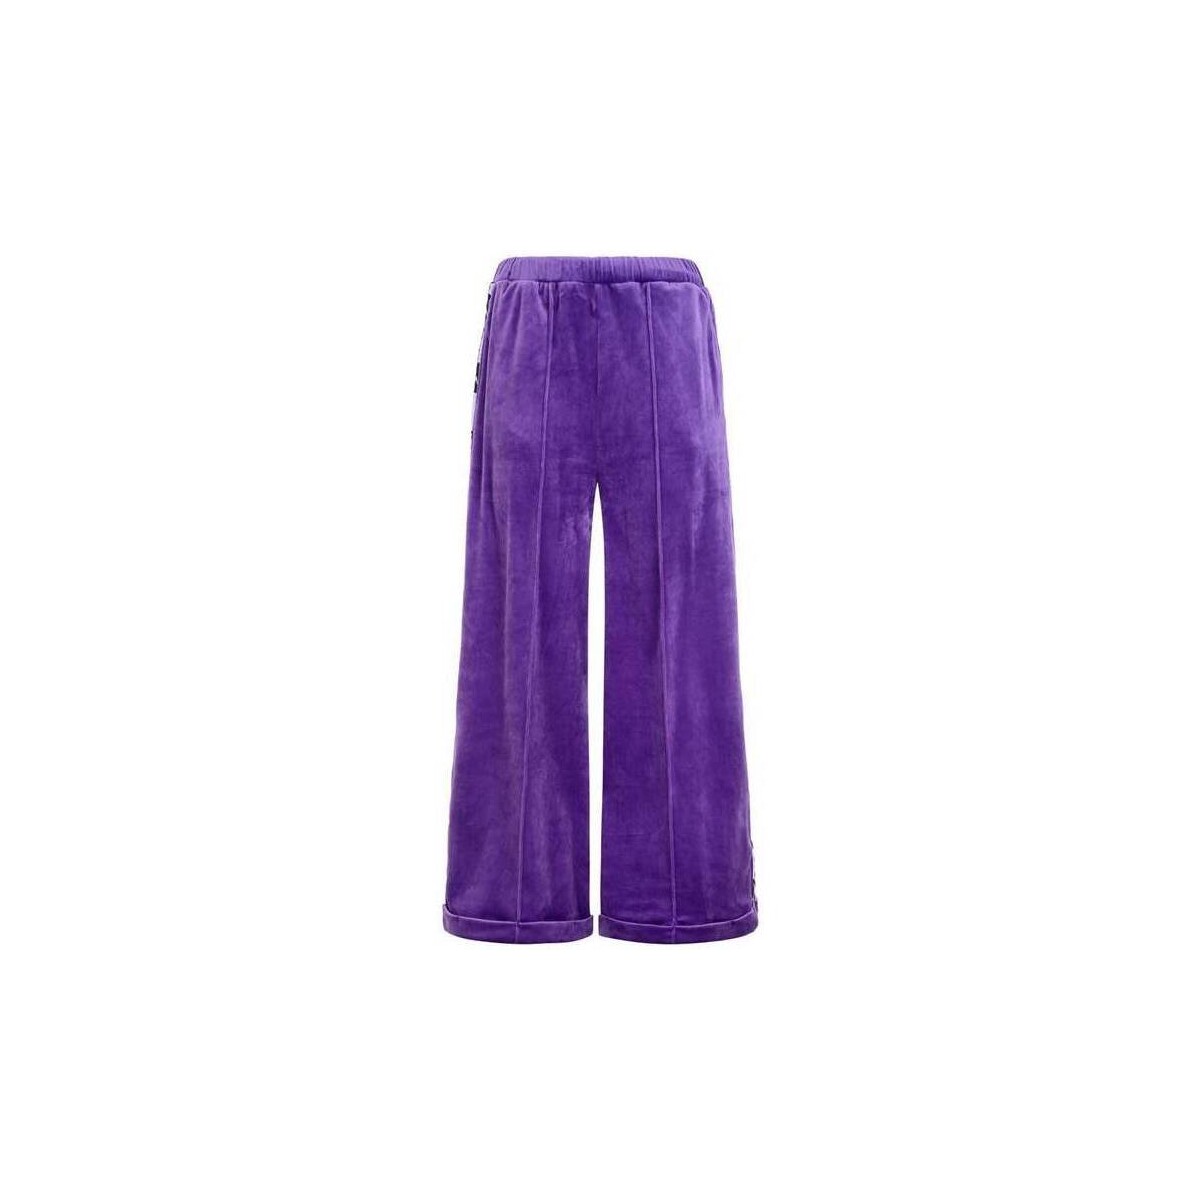 Kleidung Damen Flare Jeans/Bootcut Kappa 311148W Violett